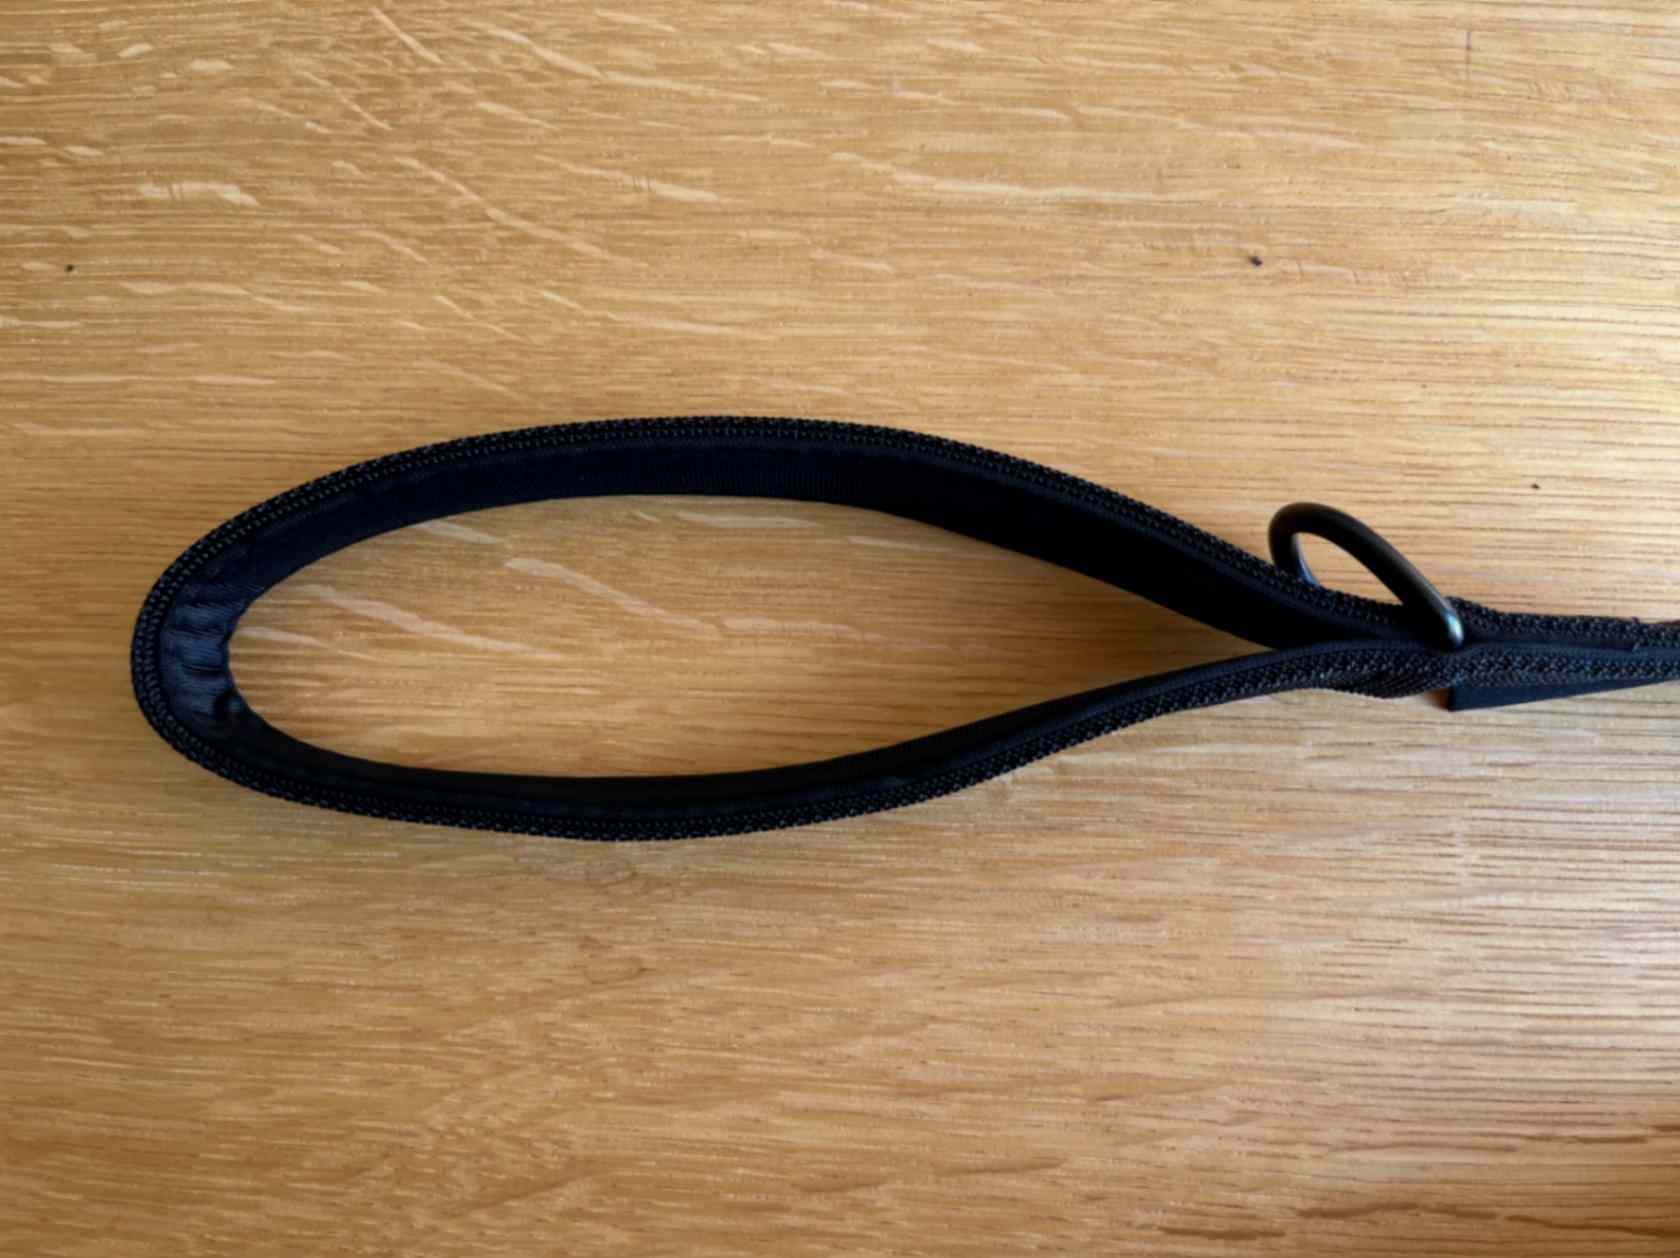 Handle of black leash